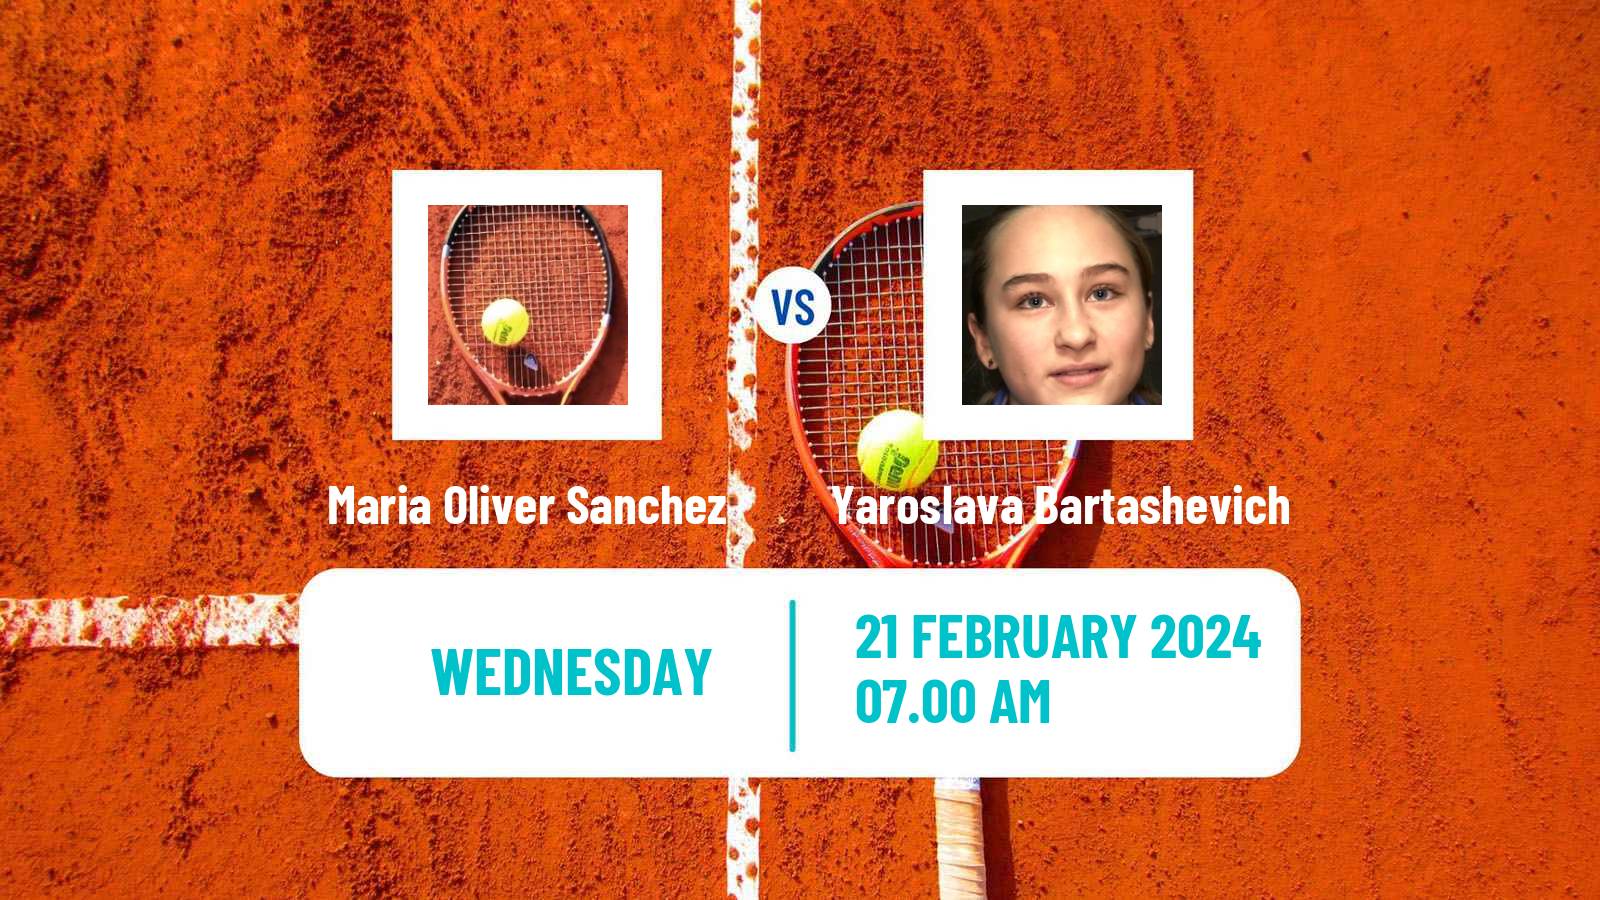 Tennis ITF W15 Manacor 2 Women Maria Oliver Sanchez - Yaroslava Bartashevich